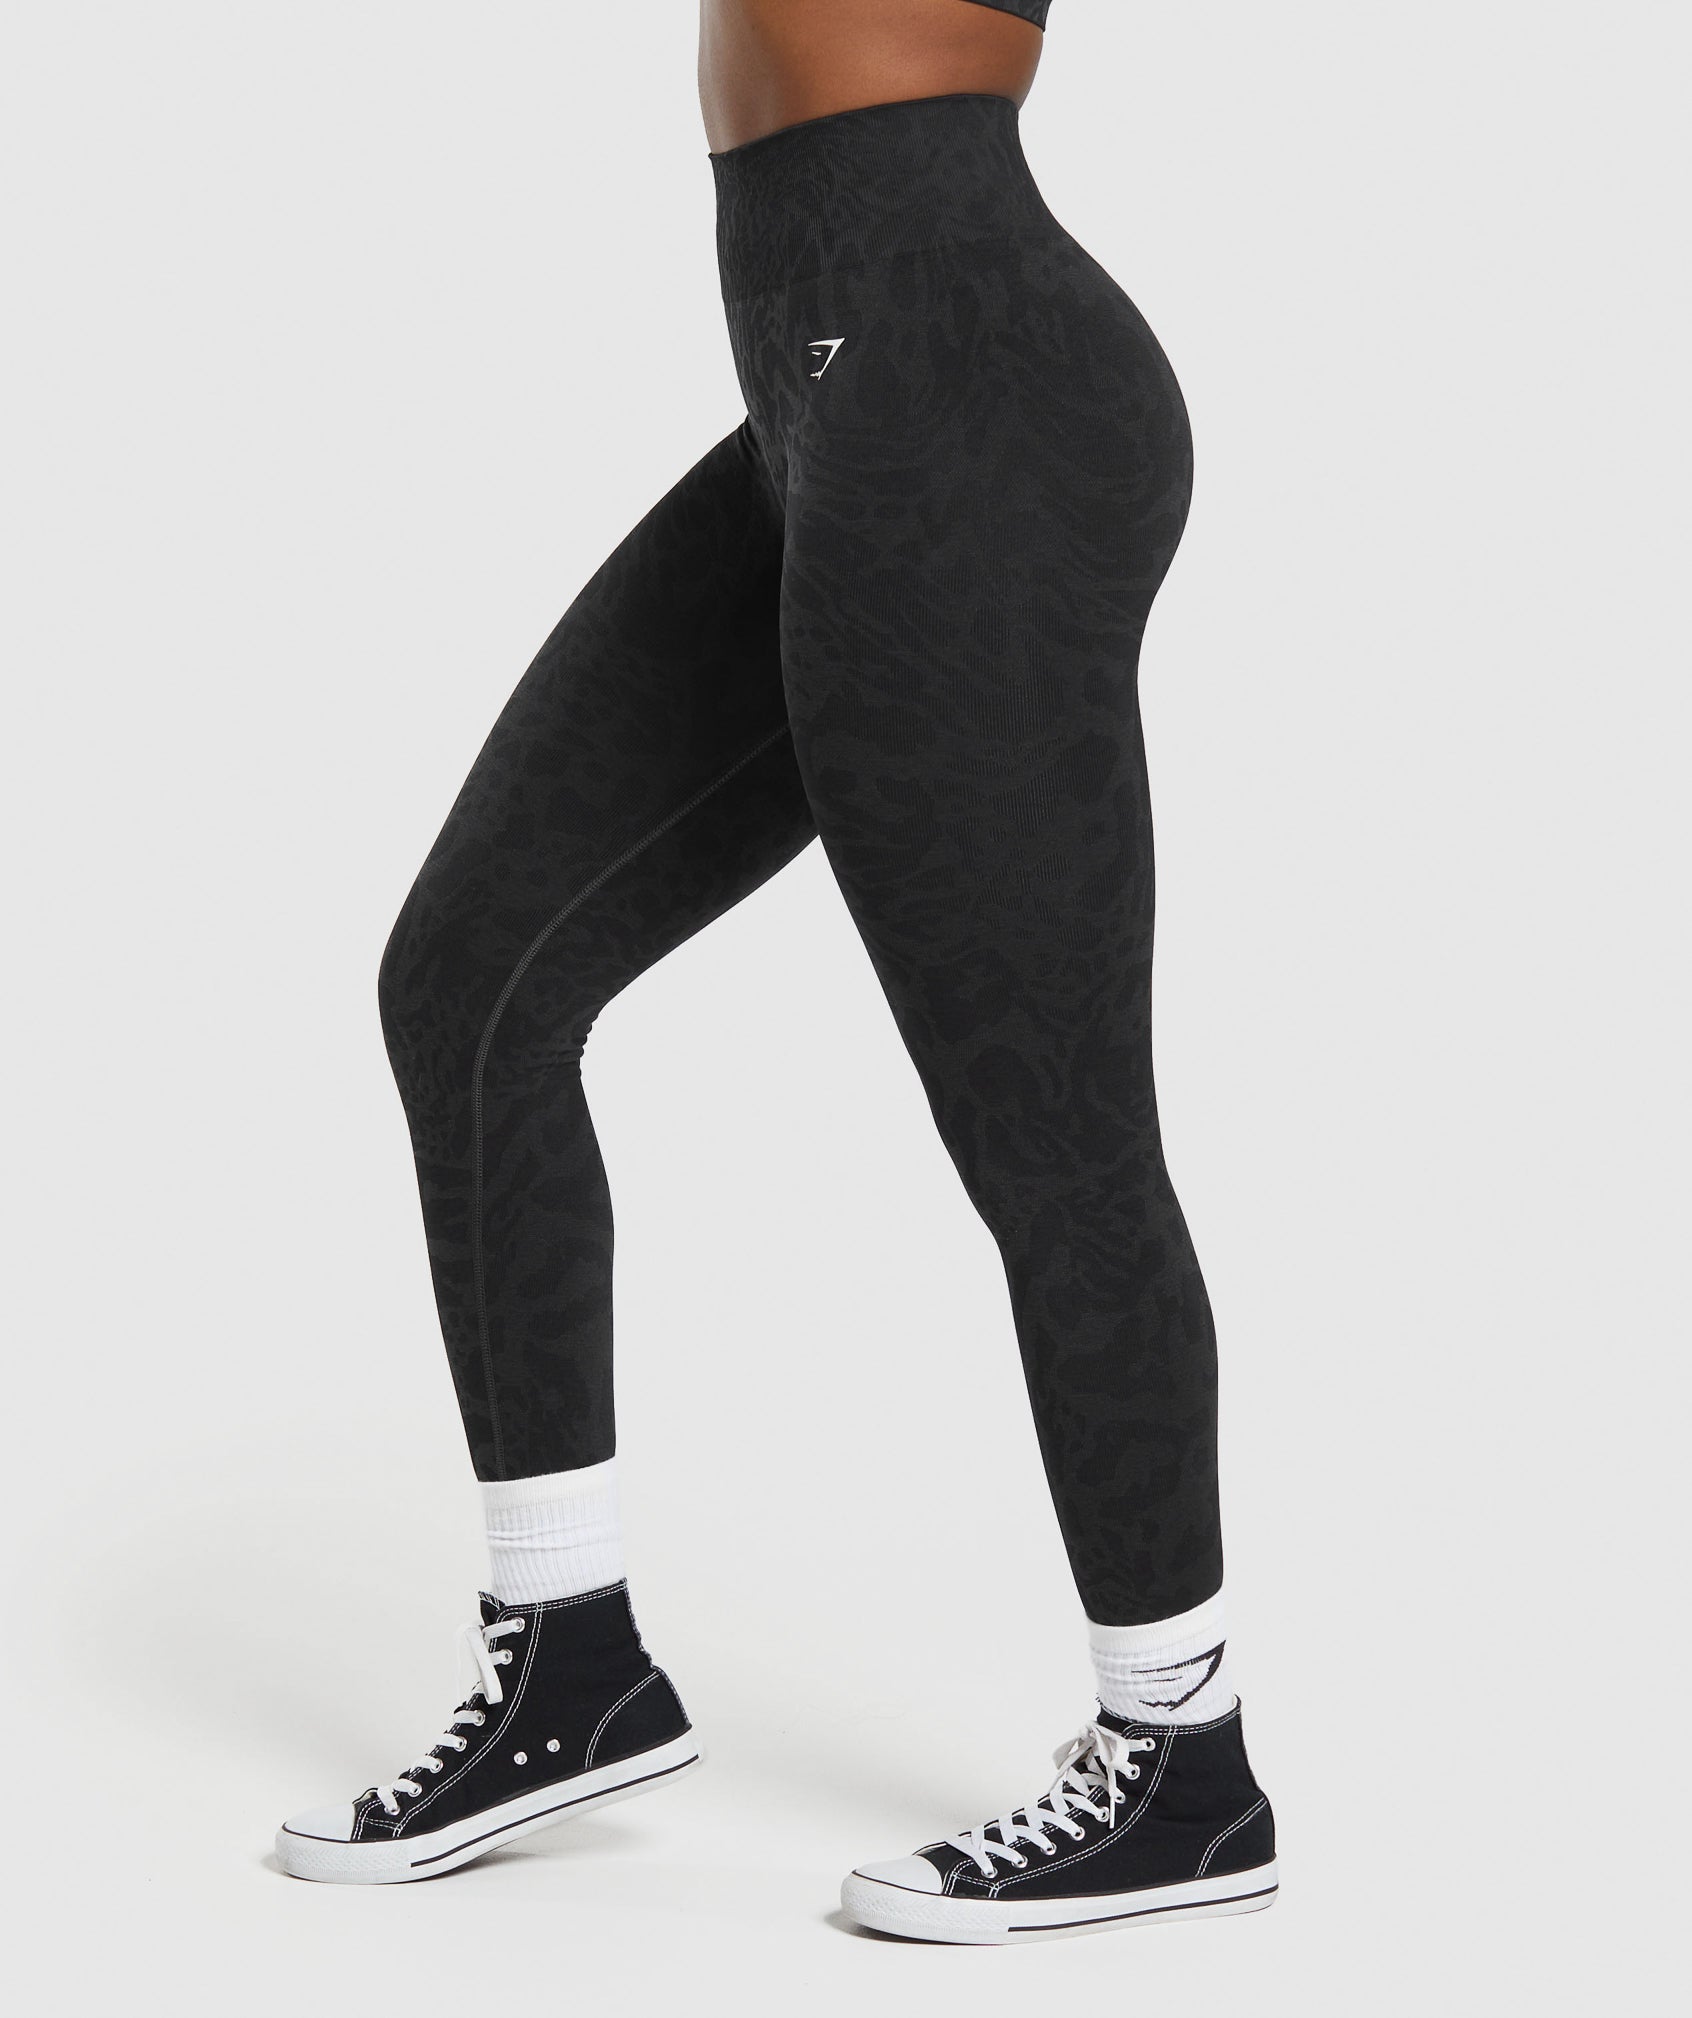 comfortable seamless tights Dark Grey Wave Leggings from Famme sportswear